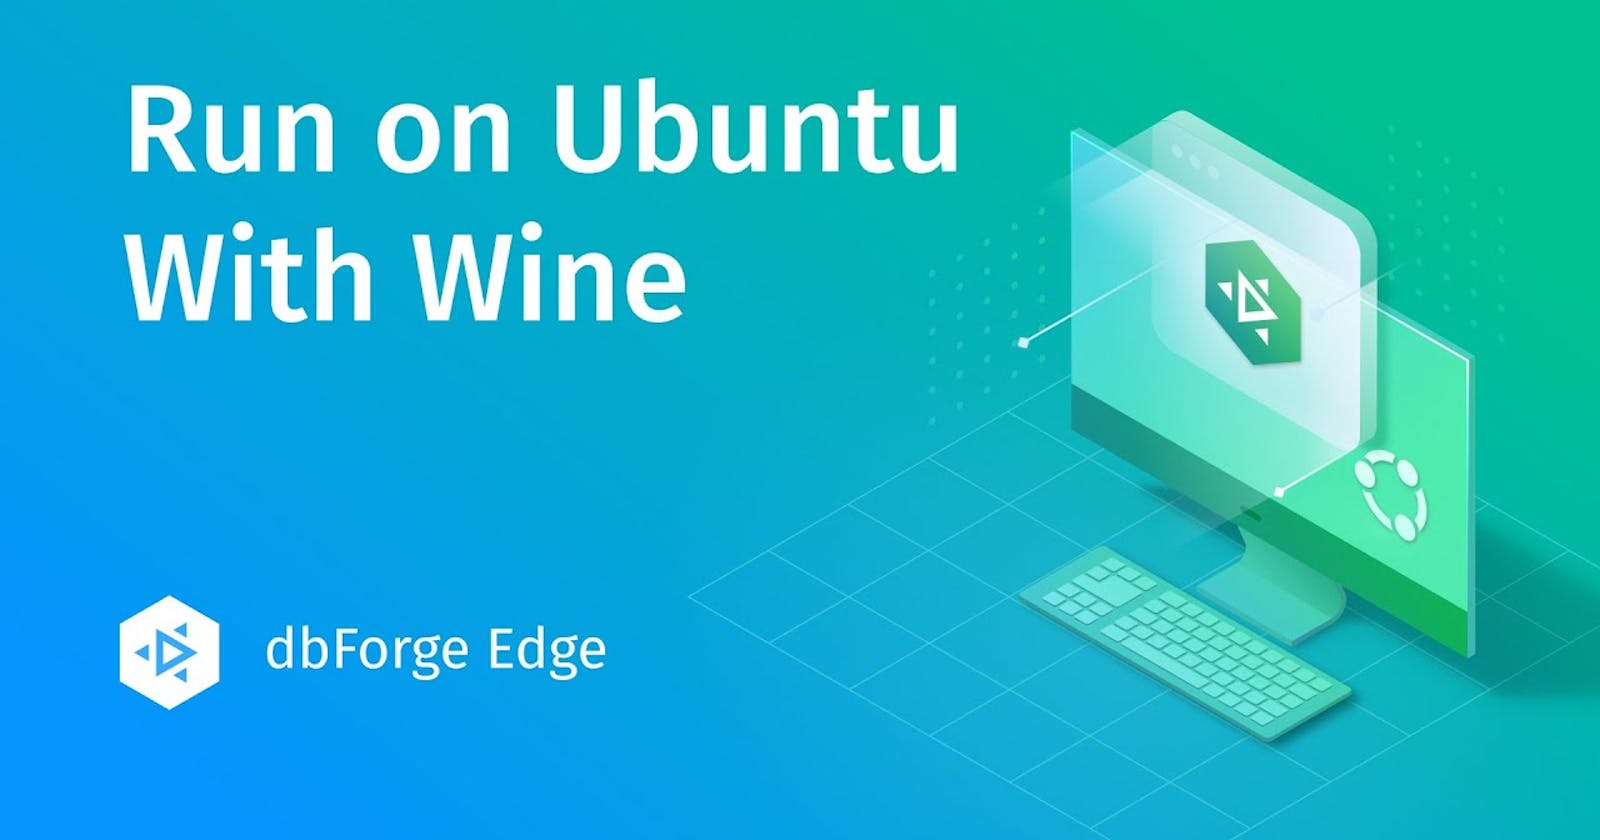 How to Install dbForge Edge on Ubuntu Using Wine